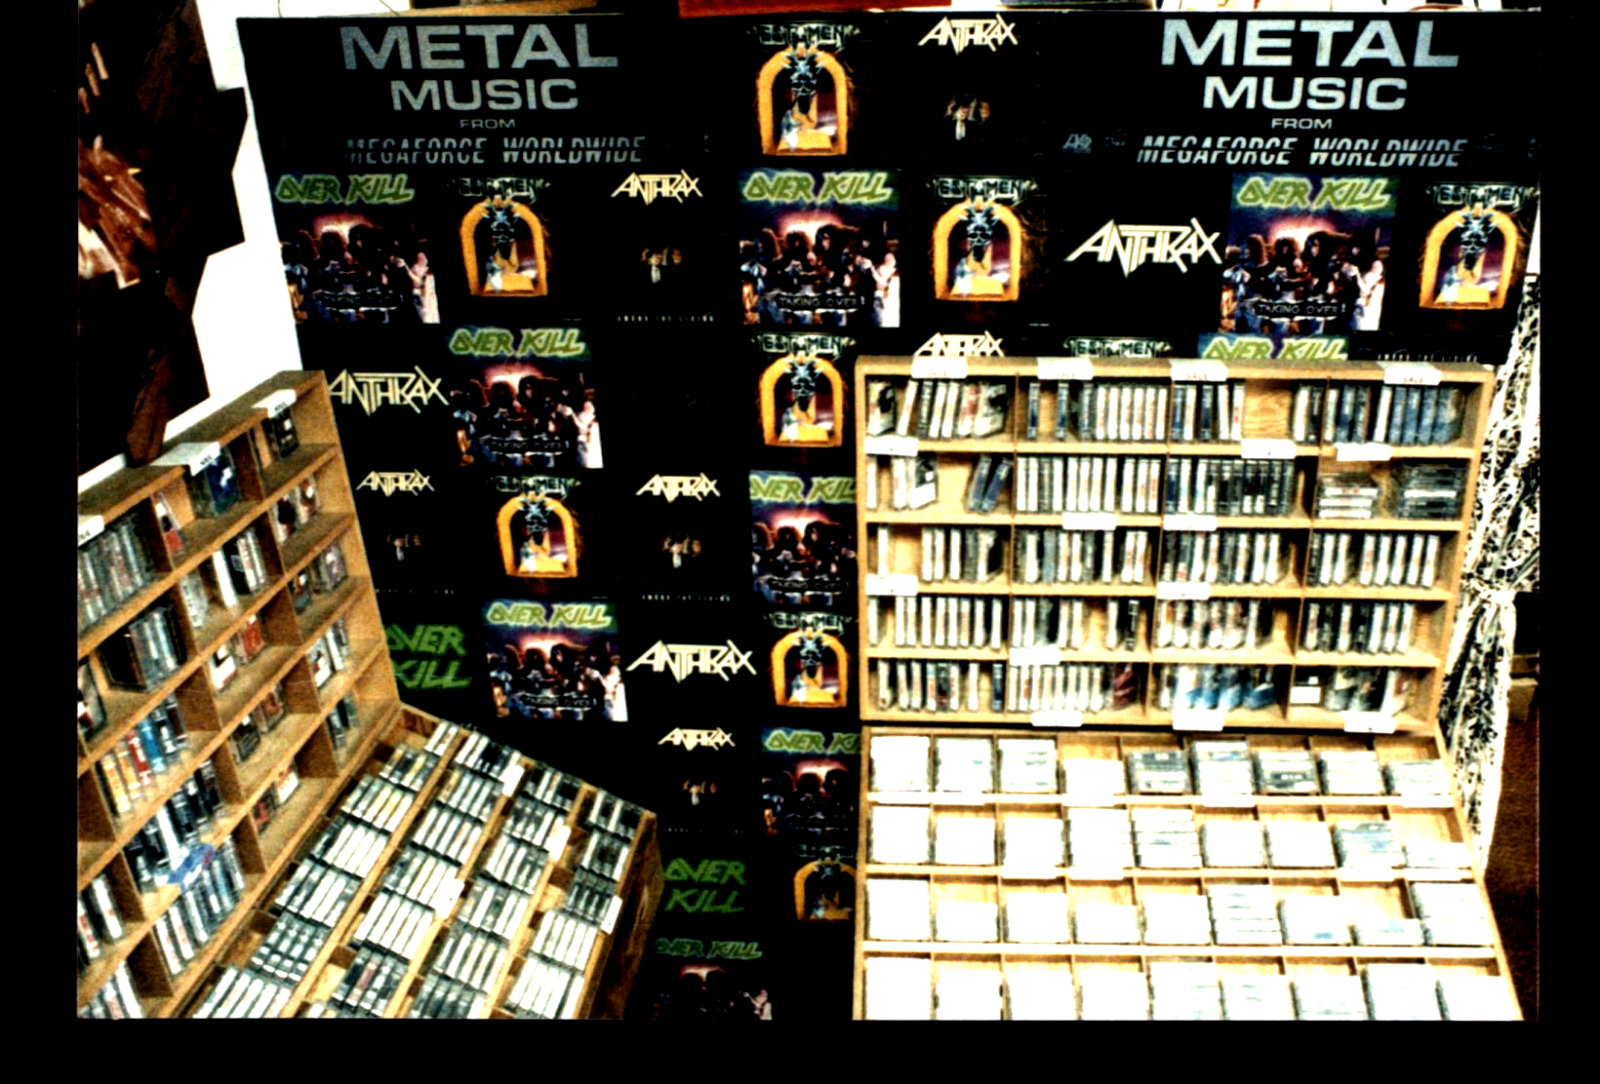 Vintage Store Display Photo Metal Music Anthrax Overkill Testament